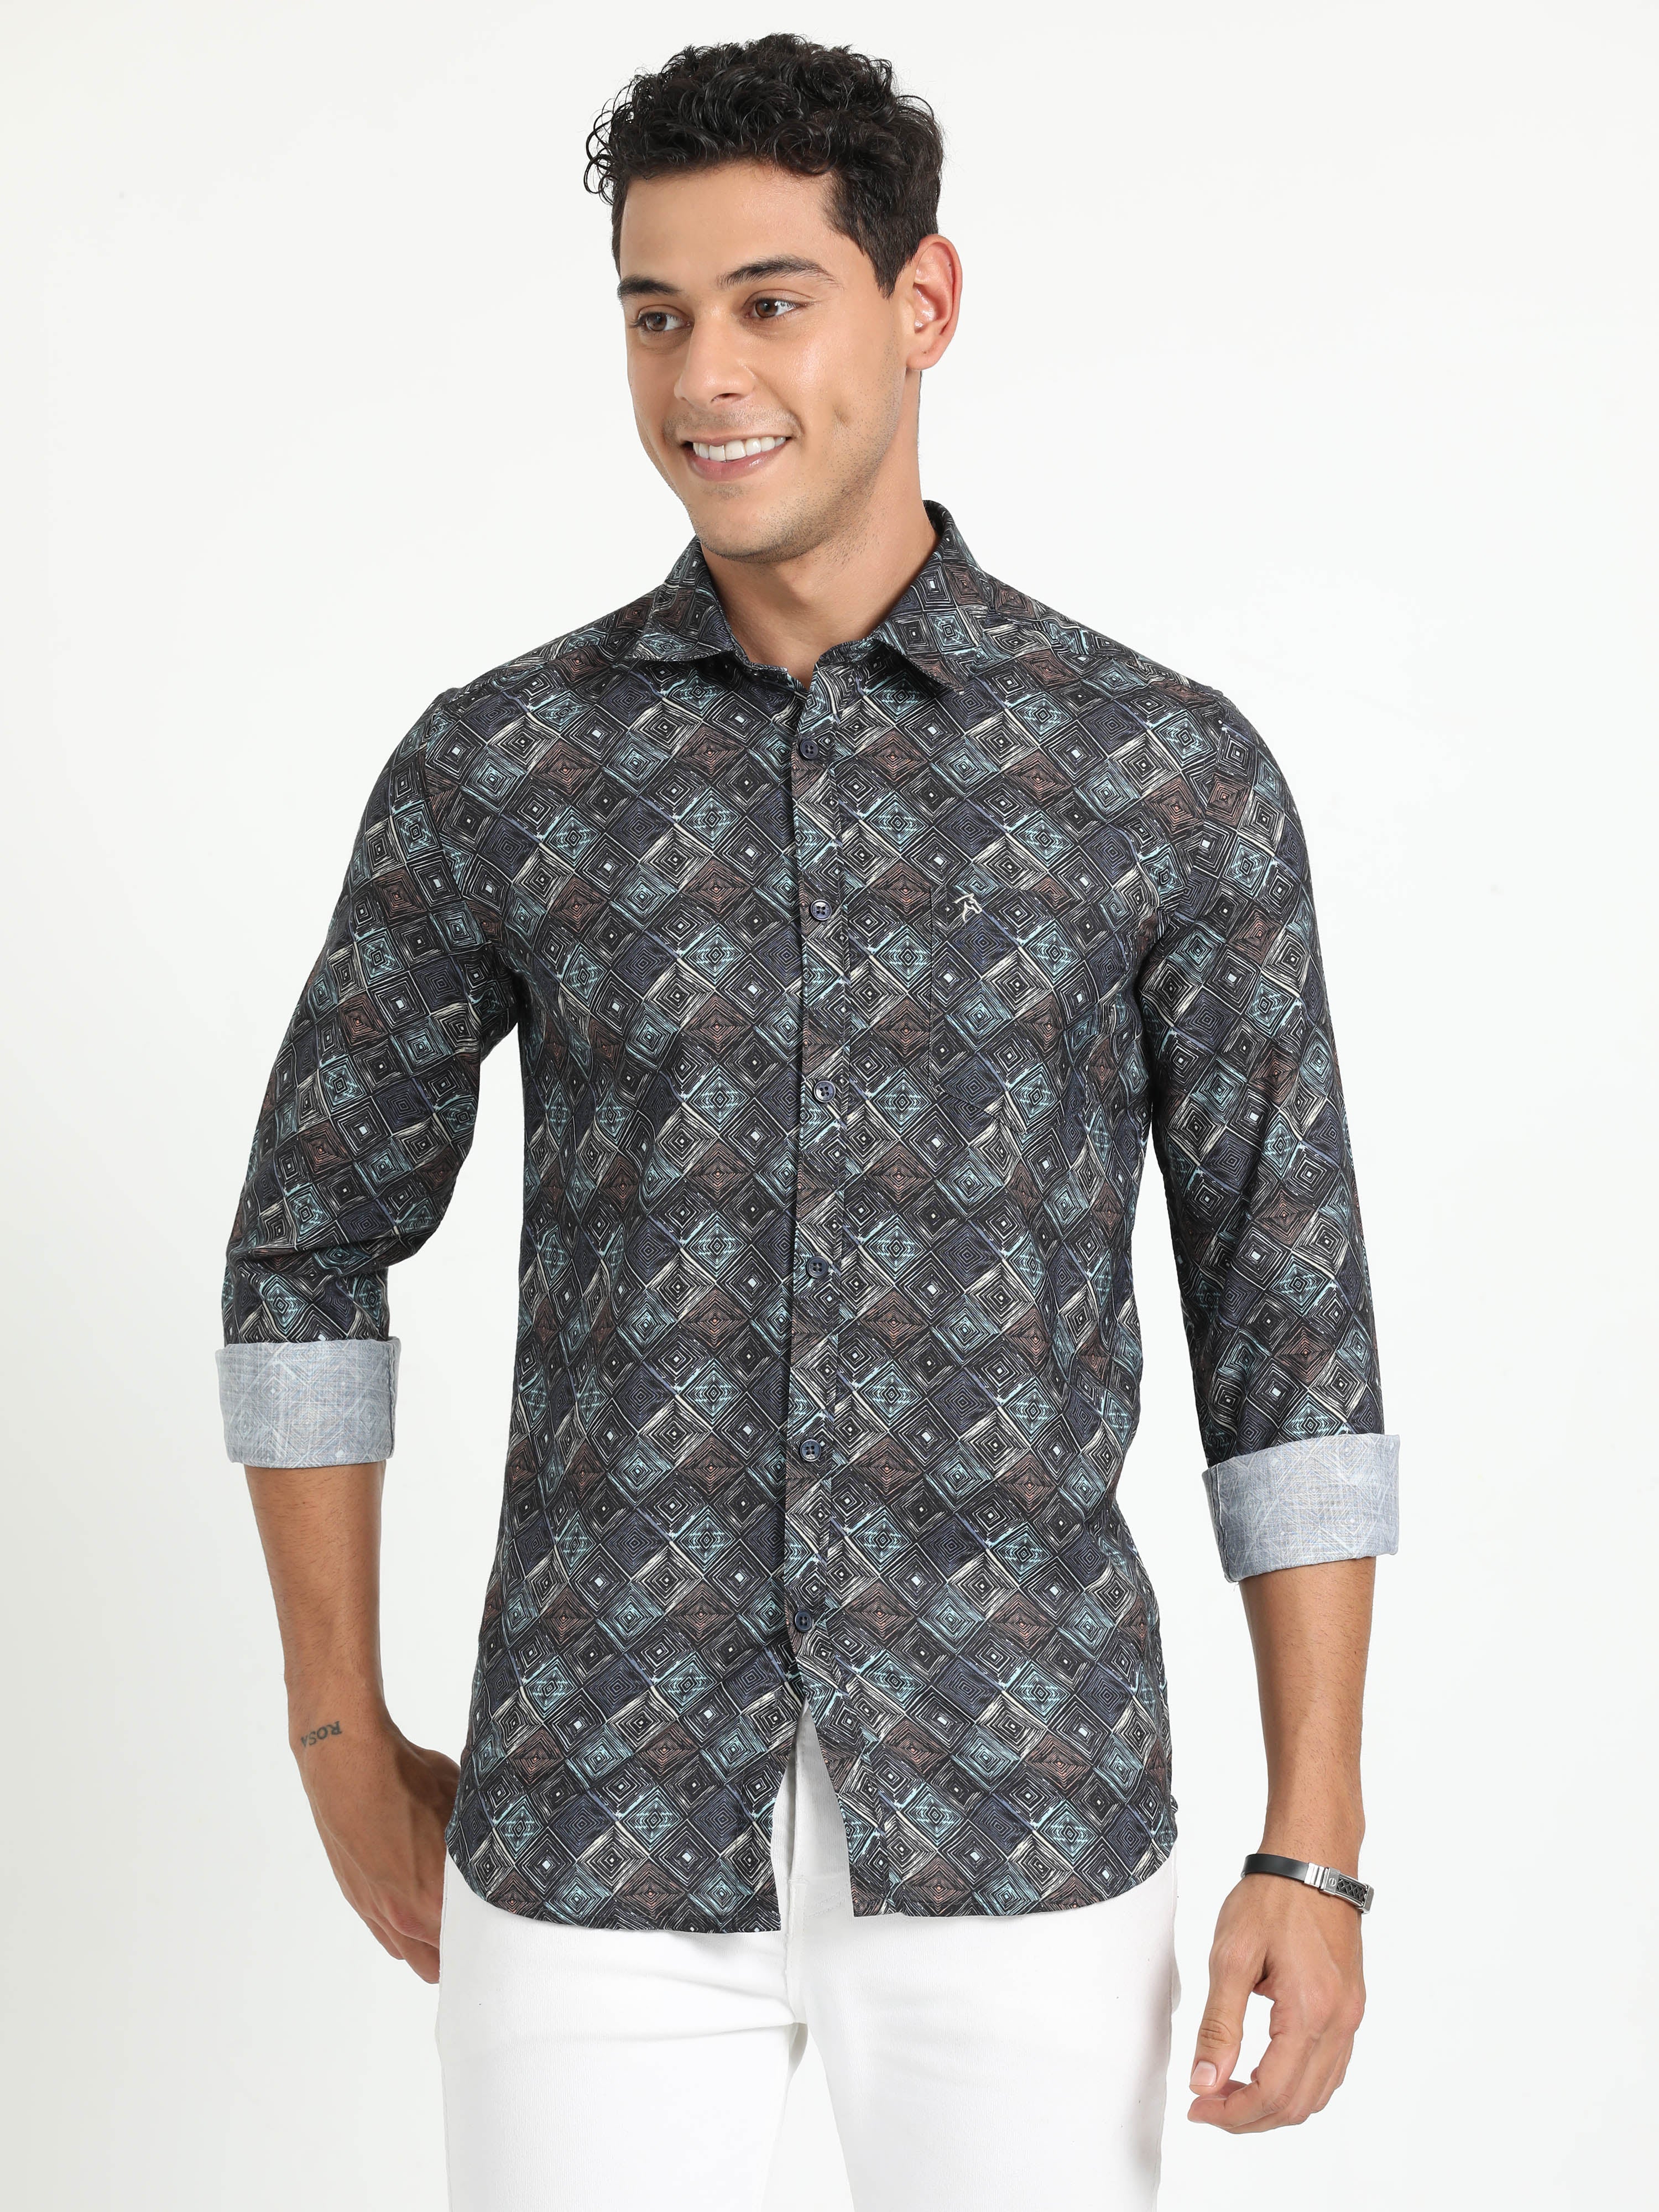 Cp Bro Men's Printed Multi Cotton Full Sleeve Woven Shirt